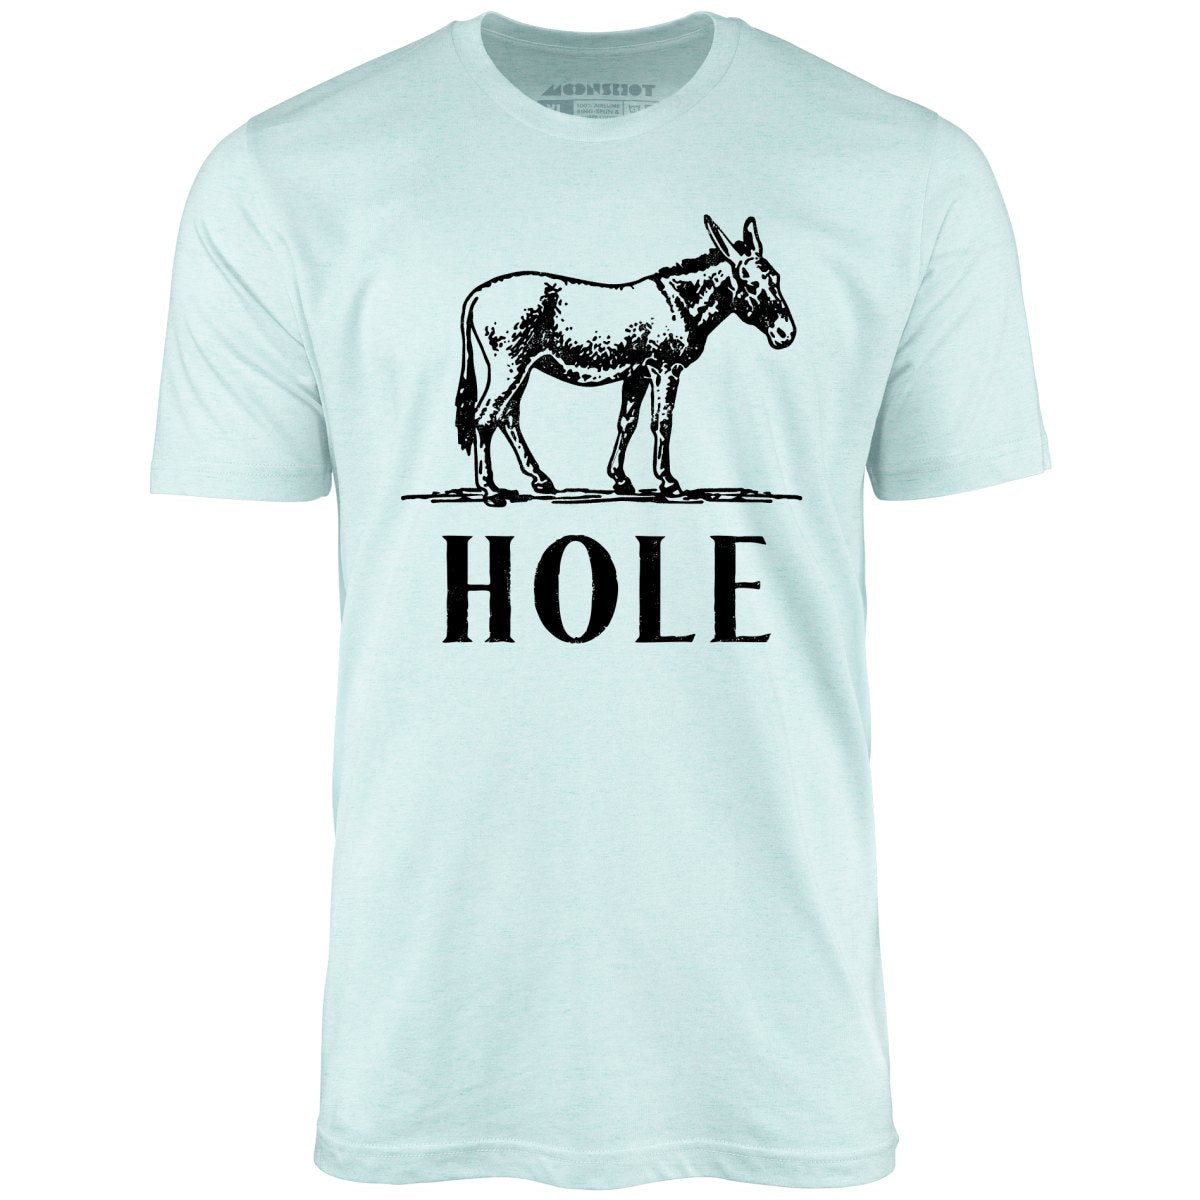 Asshole - Unisex T-Shirt